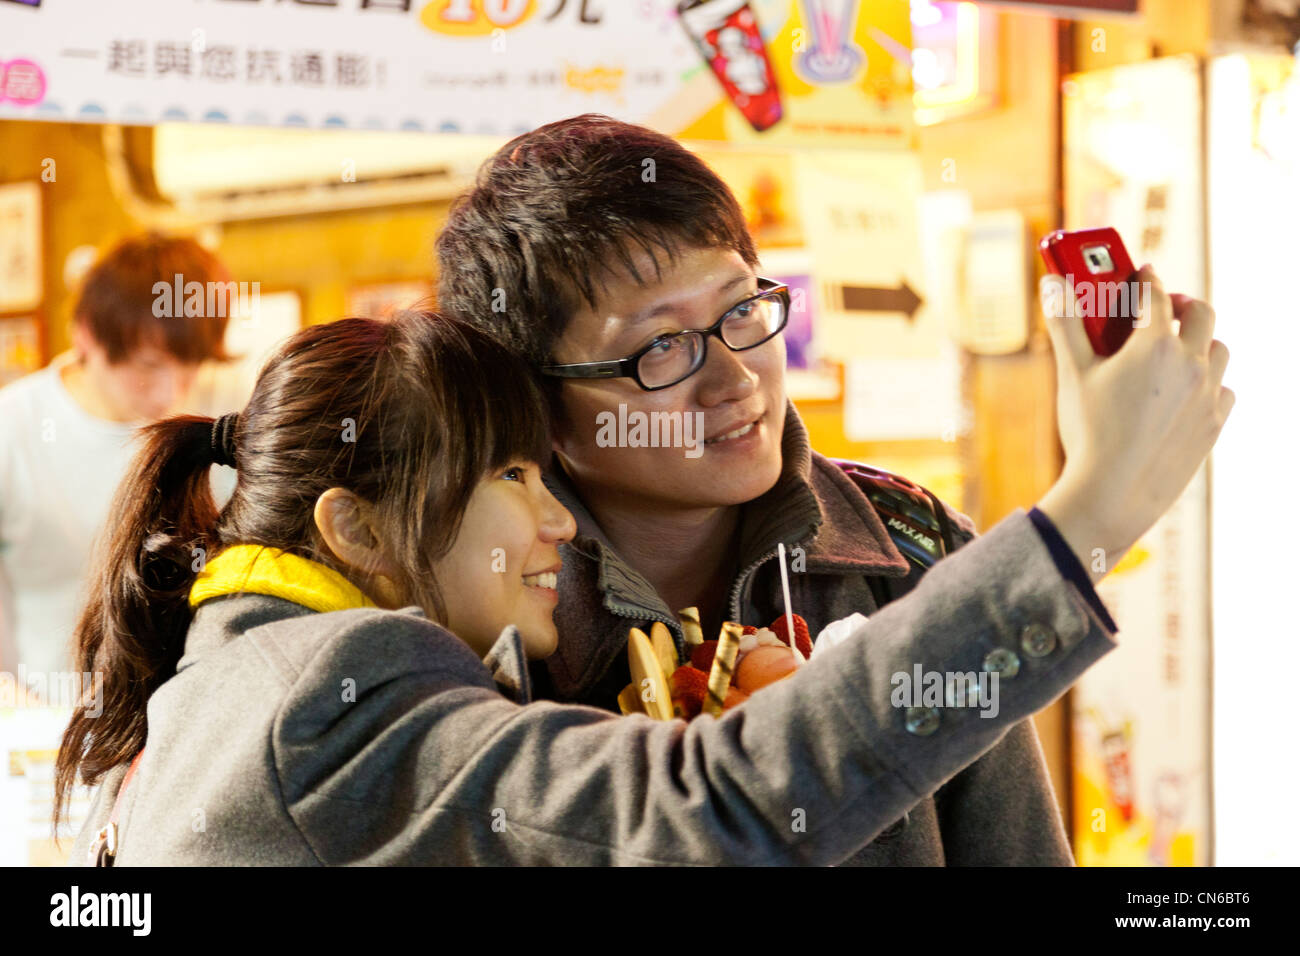 Young man and woman taking their own photograph in Shida Night Market, Taipei, Taiwan. JMH5641 Stock Photo